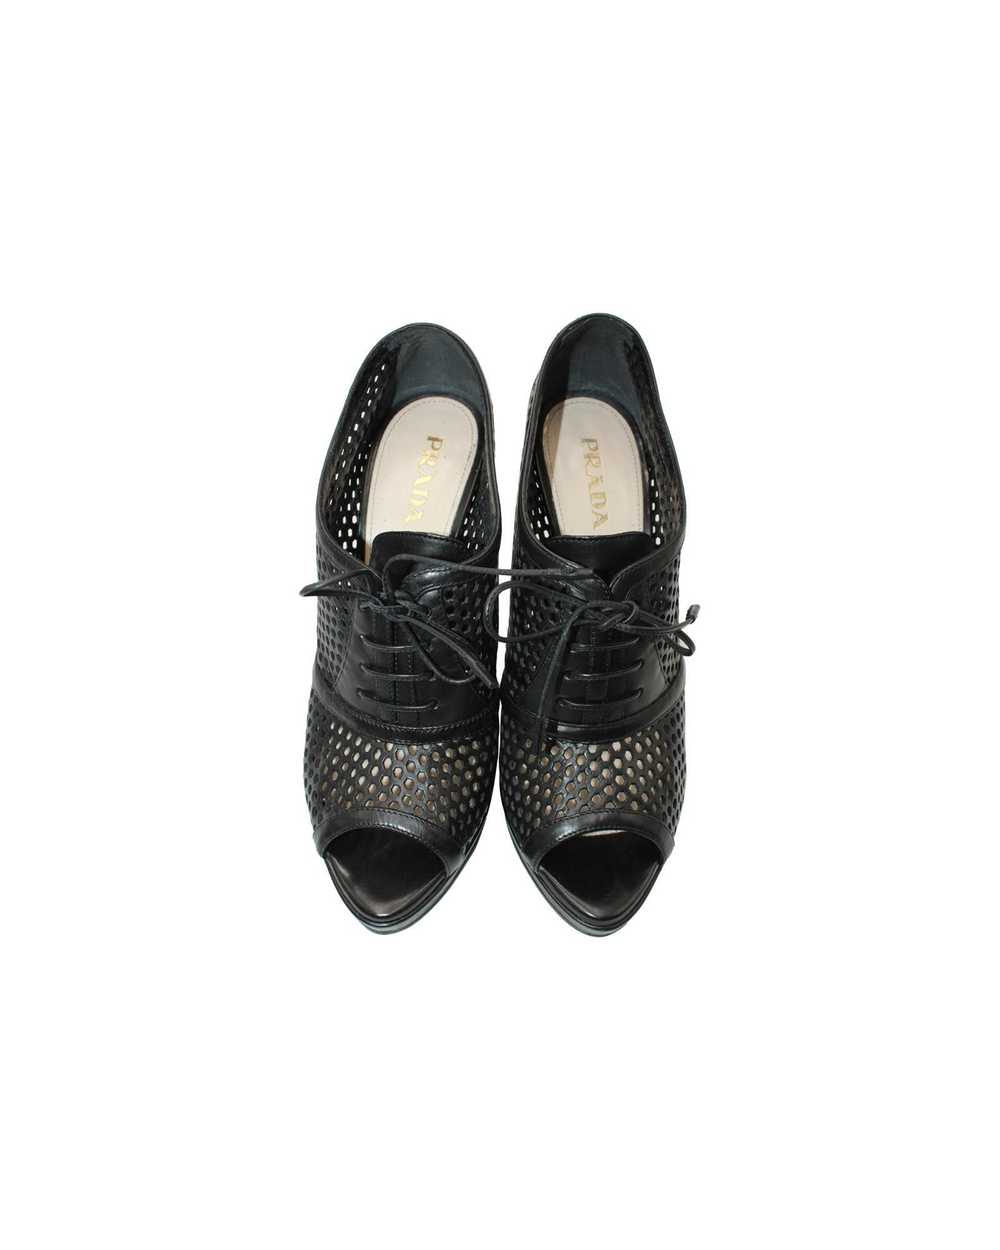 Prada Perforated Black Leather Platform Sandals - image 5